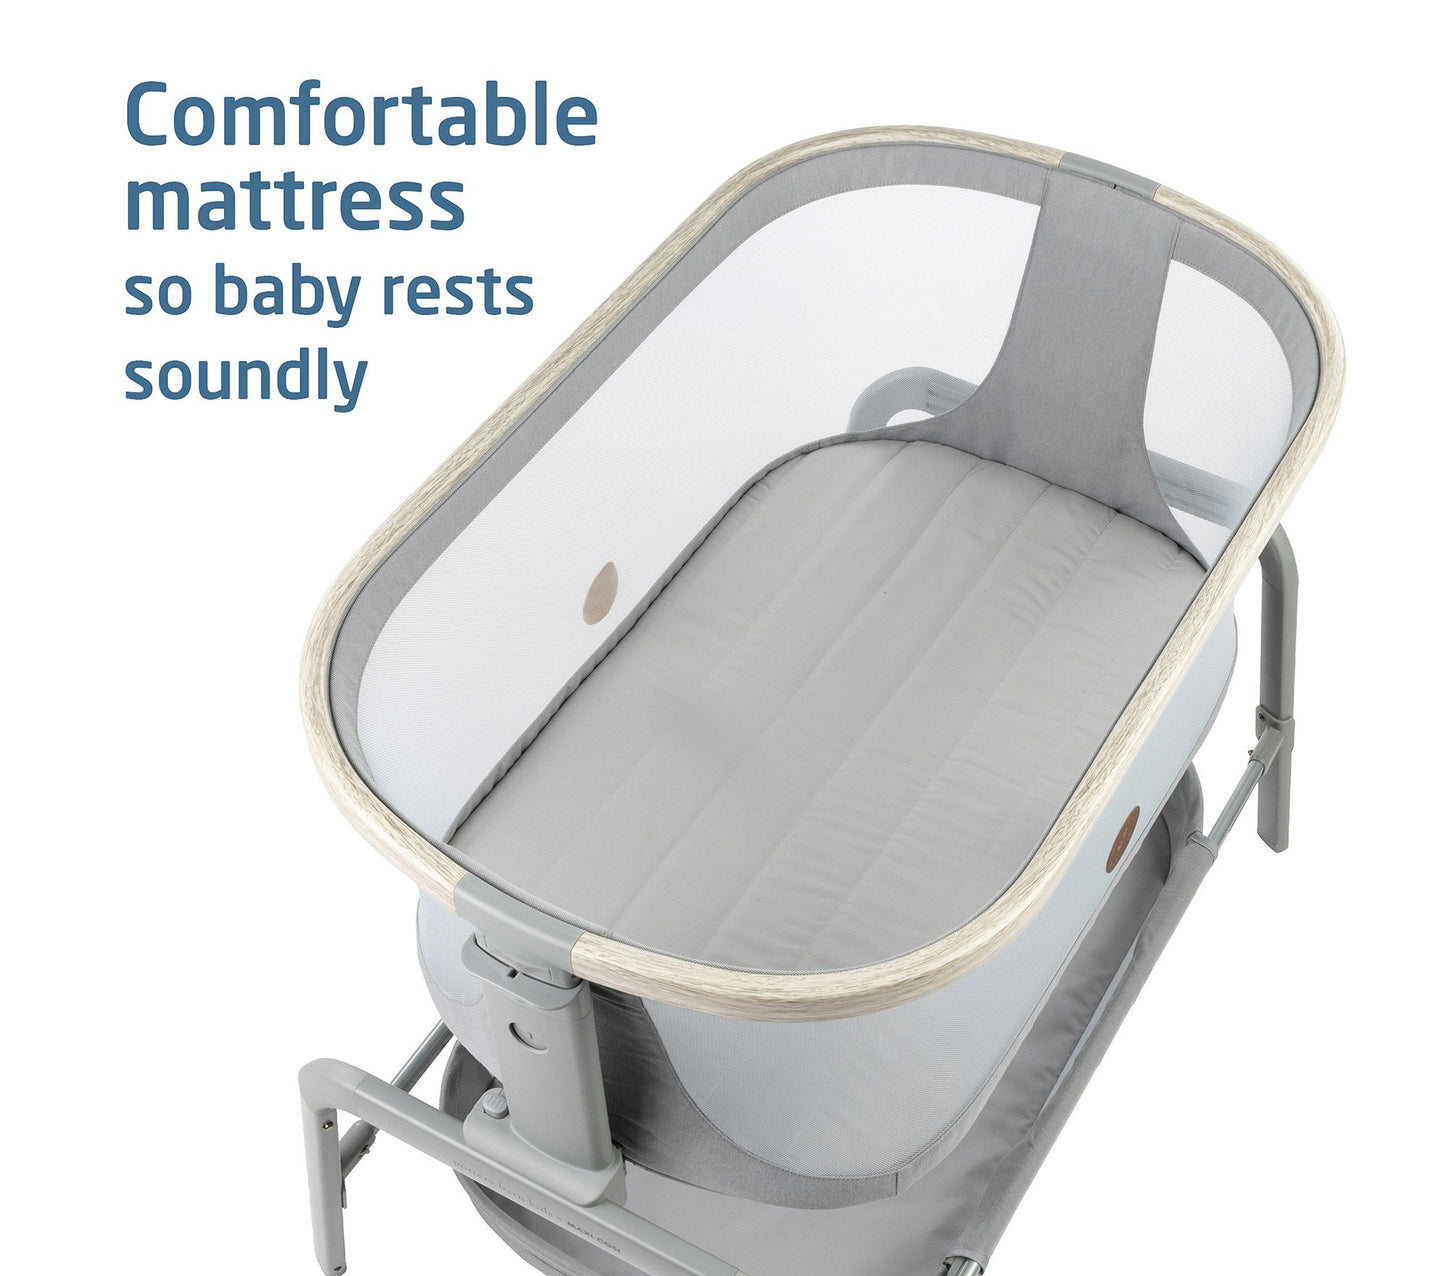 Maxi-Cosi® Iora Newborn Bassinet with a large storage basket, showcasing its sleek design and sturdy frame